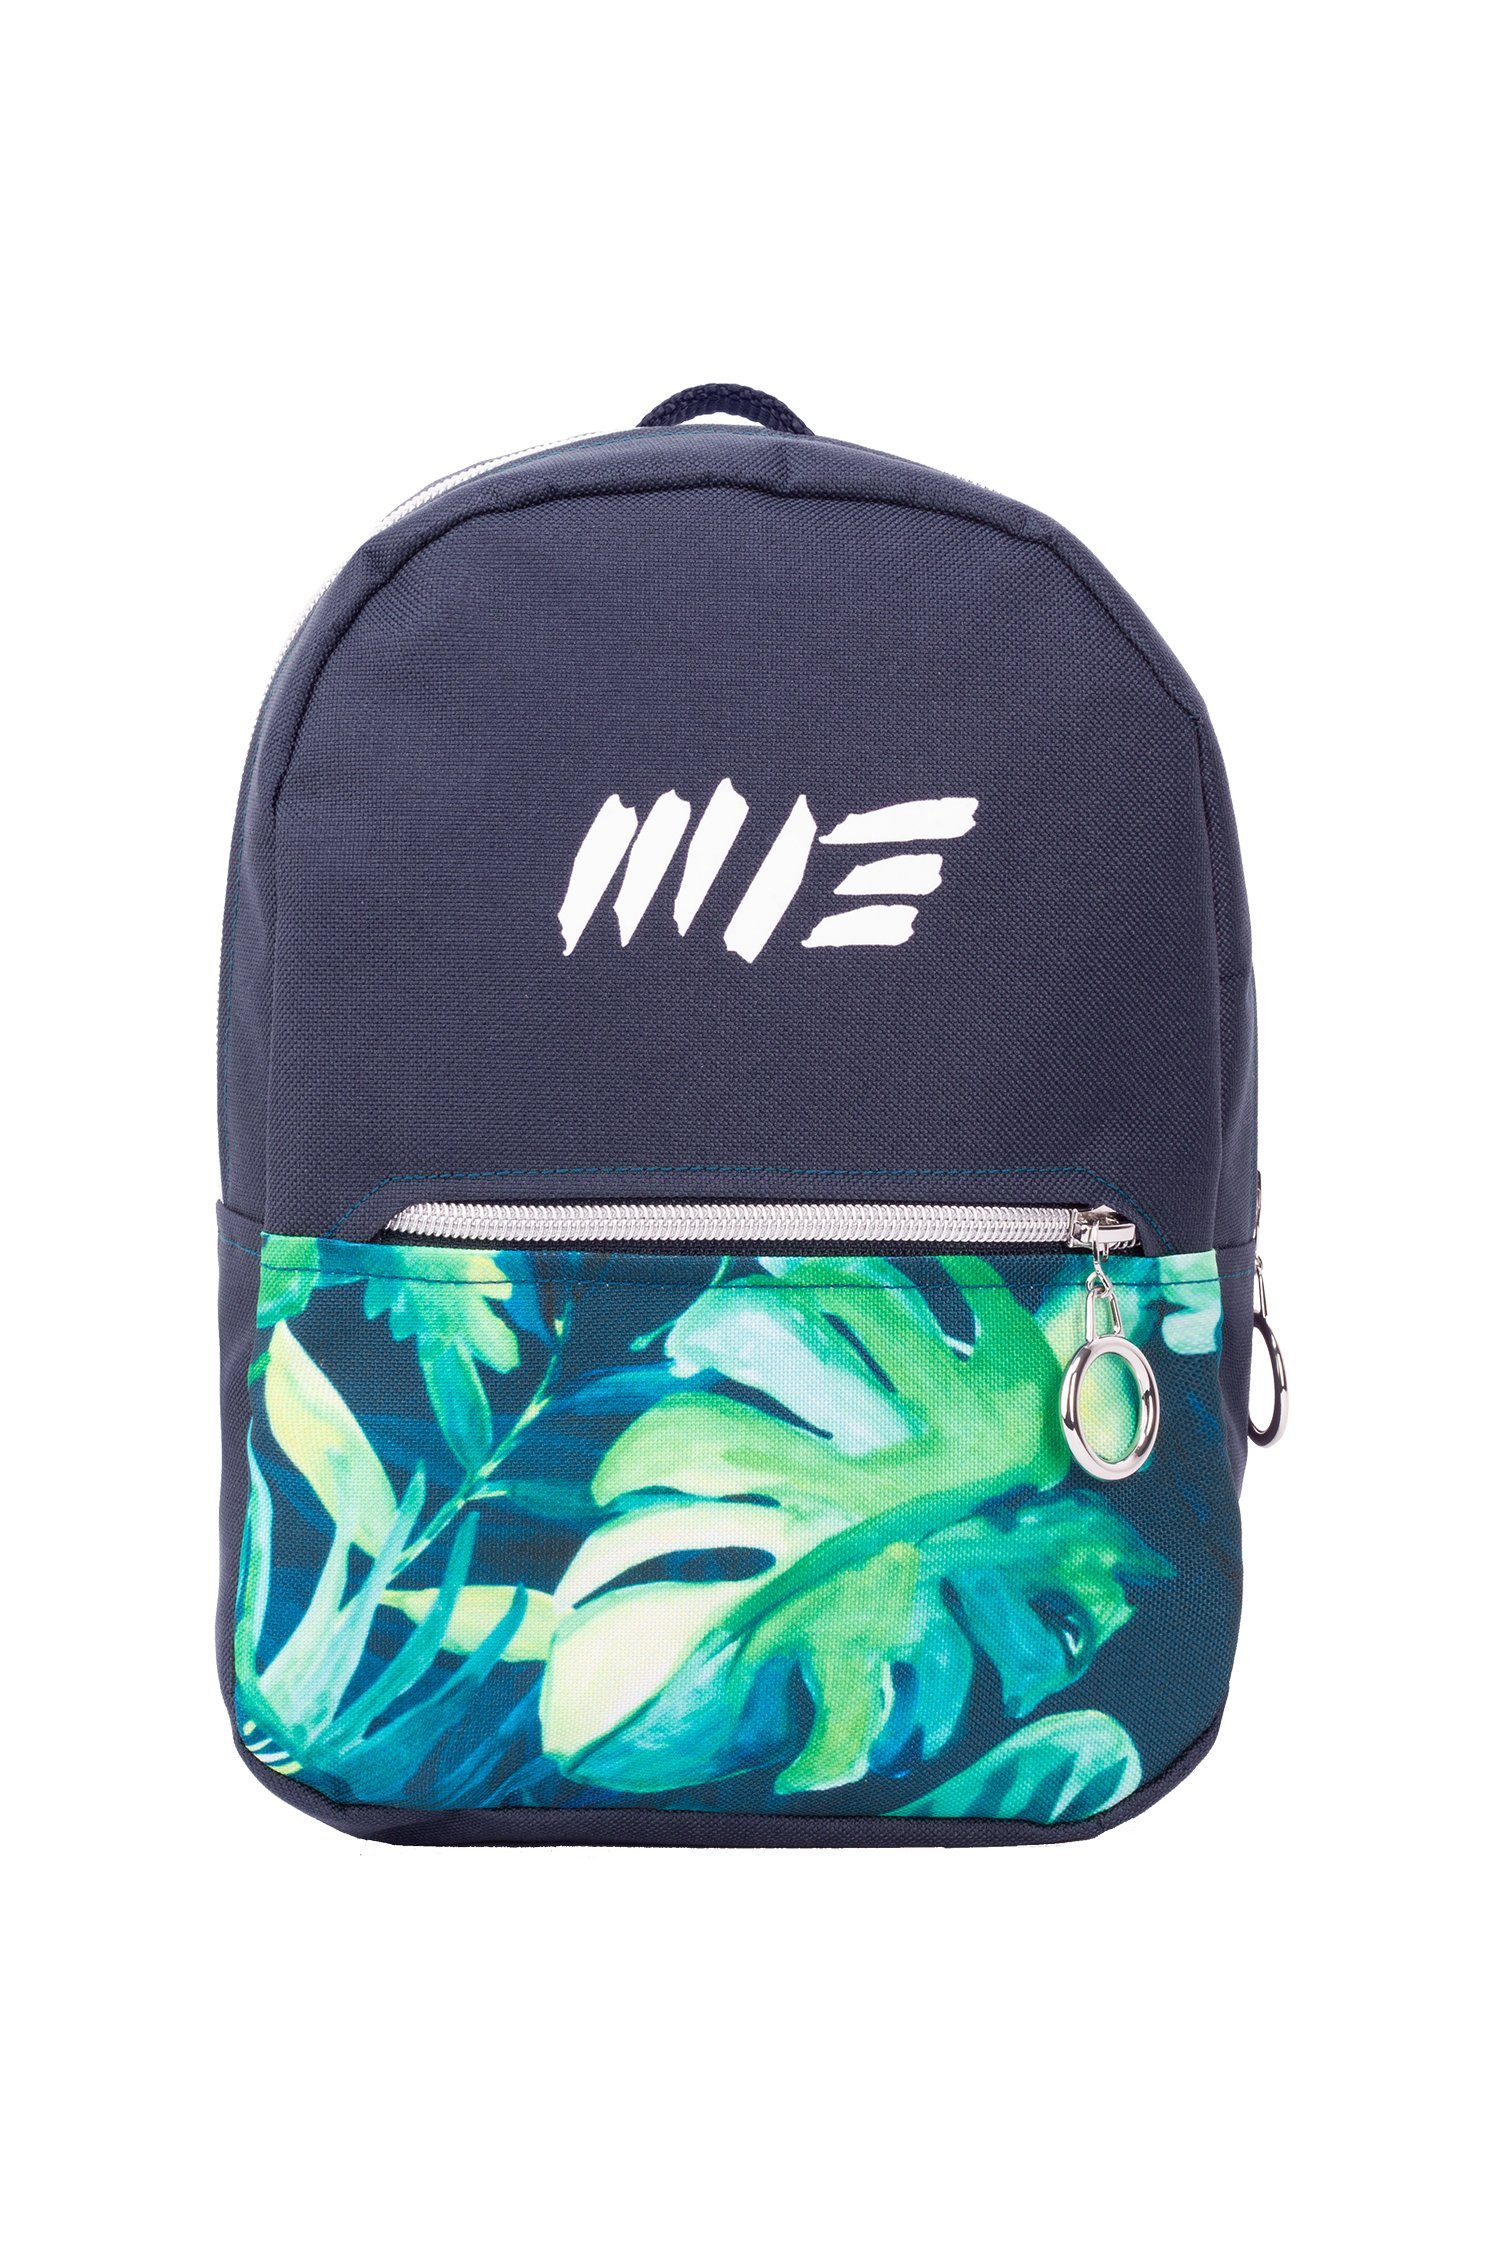 Manufaktur13 Minirucksack Mini Daypack- kleiner, wasserfester Tagesrucksack Madeira